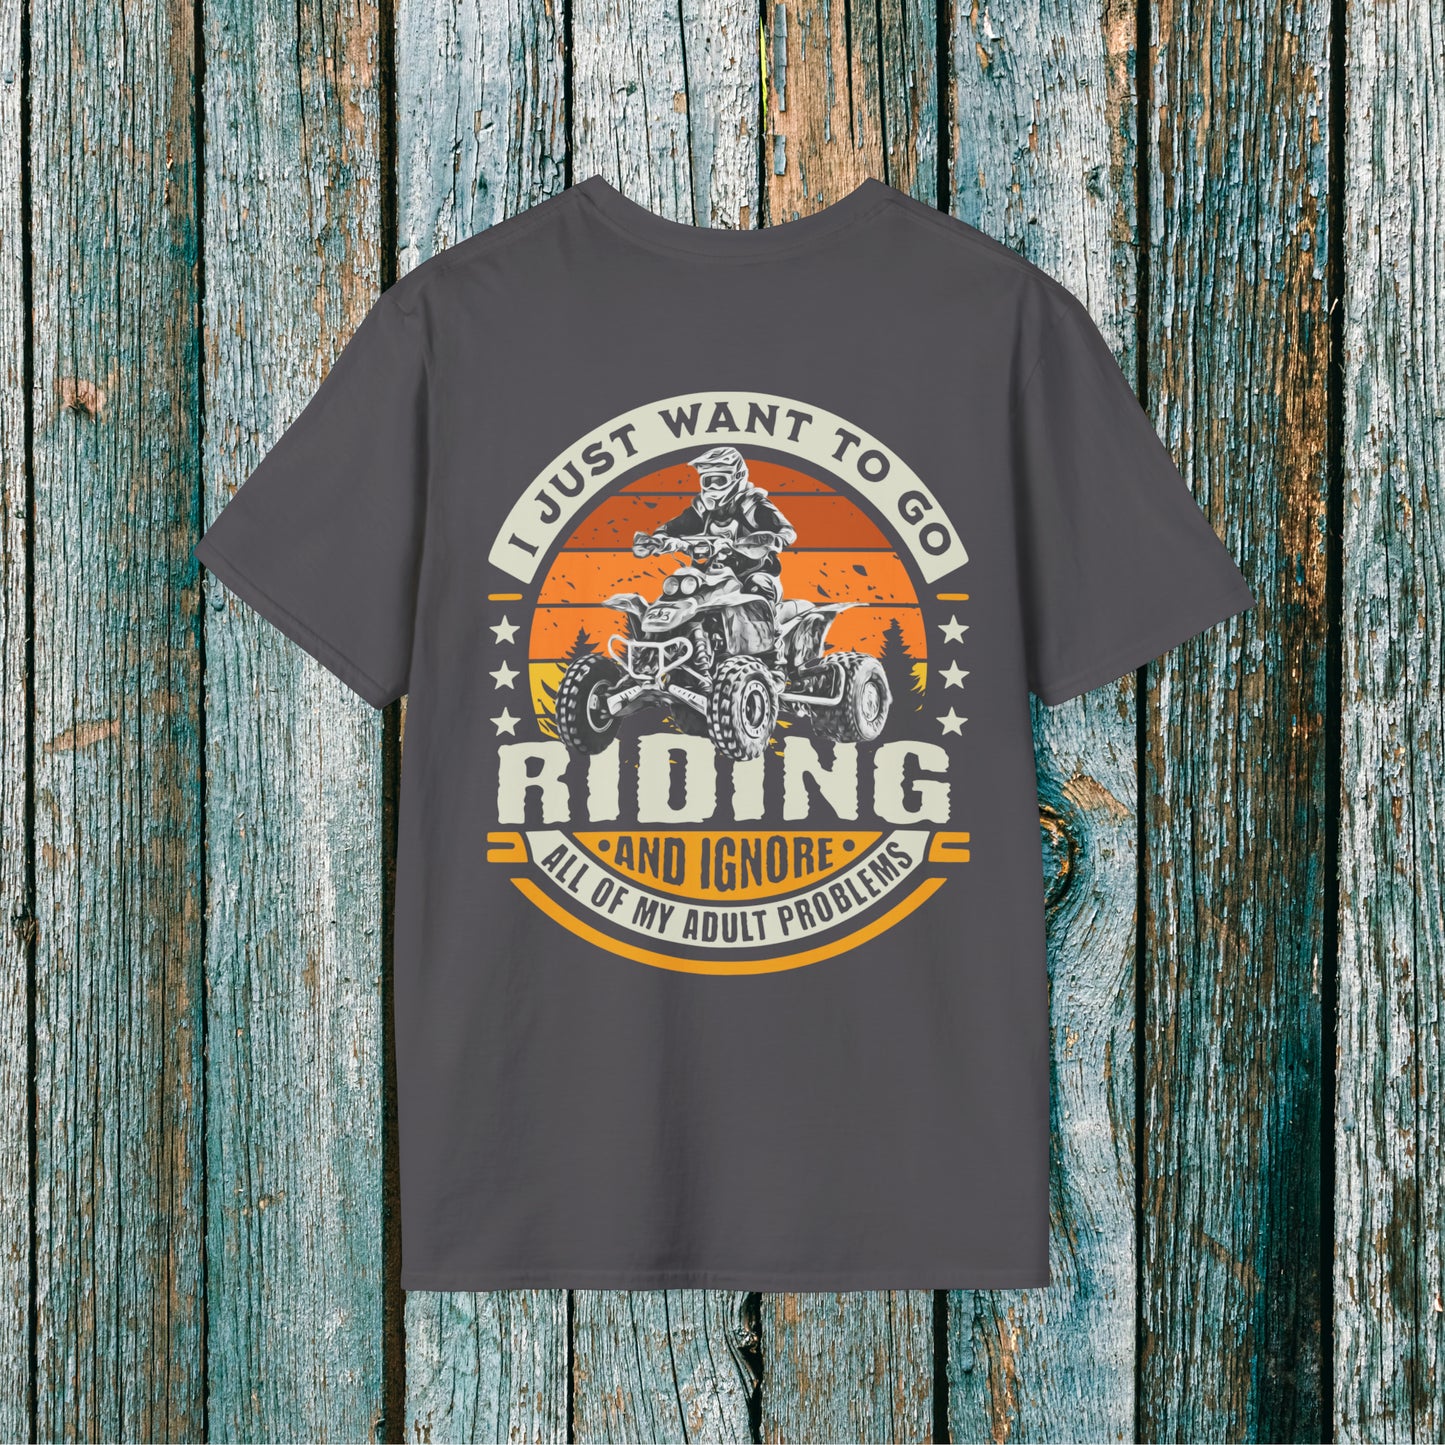 Mens Racing Shirt | Go Riding and Ignore Adult Problems | Honda 400 EX ATV on front & back | ATV Riding Shirt |  SOFT Cotton 2 SIDED Adult Unisex tee shirt | Four wheeler shirt